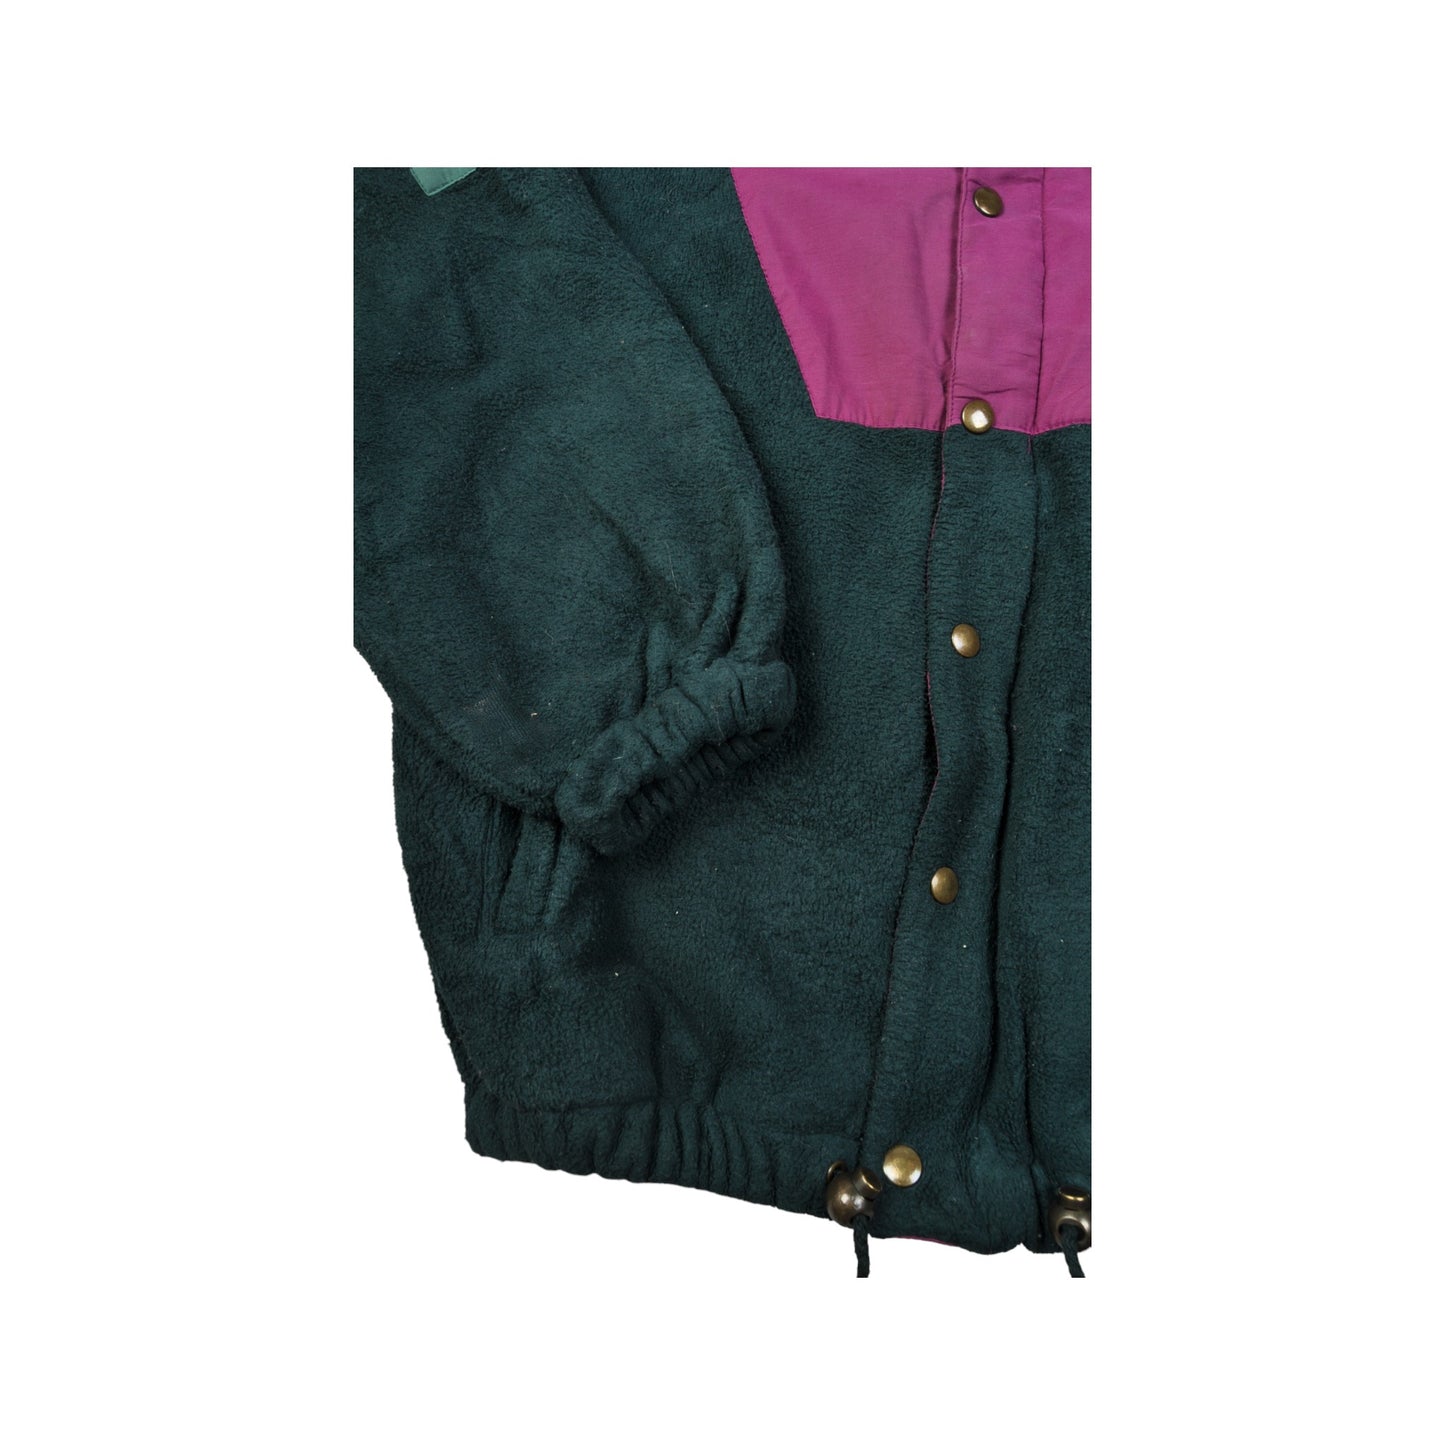 Vintage Fleece Jacket Retro Green Medium